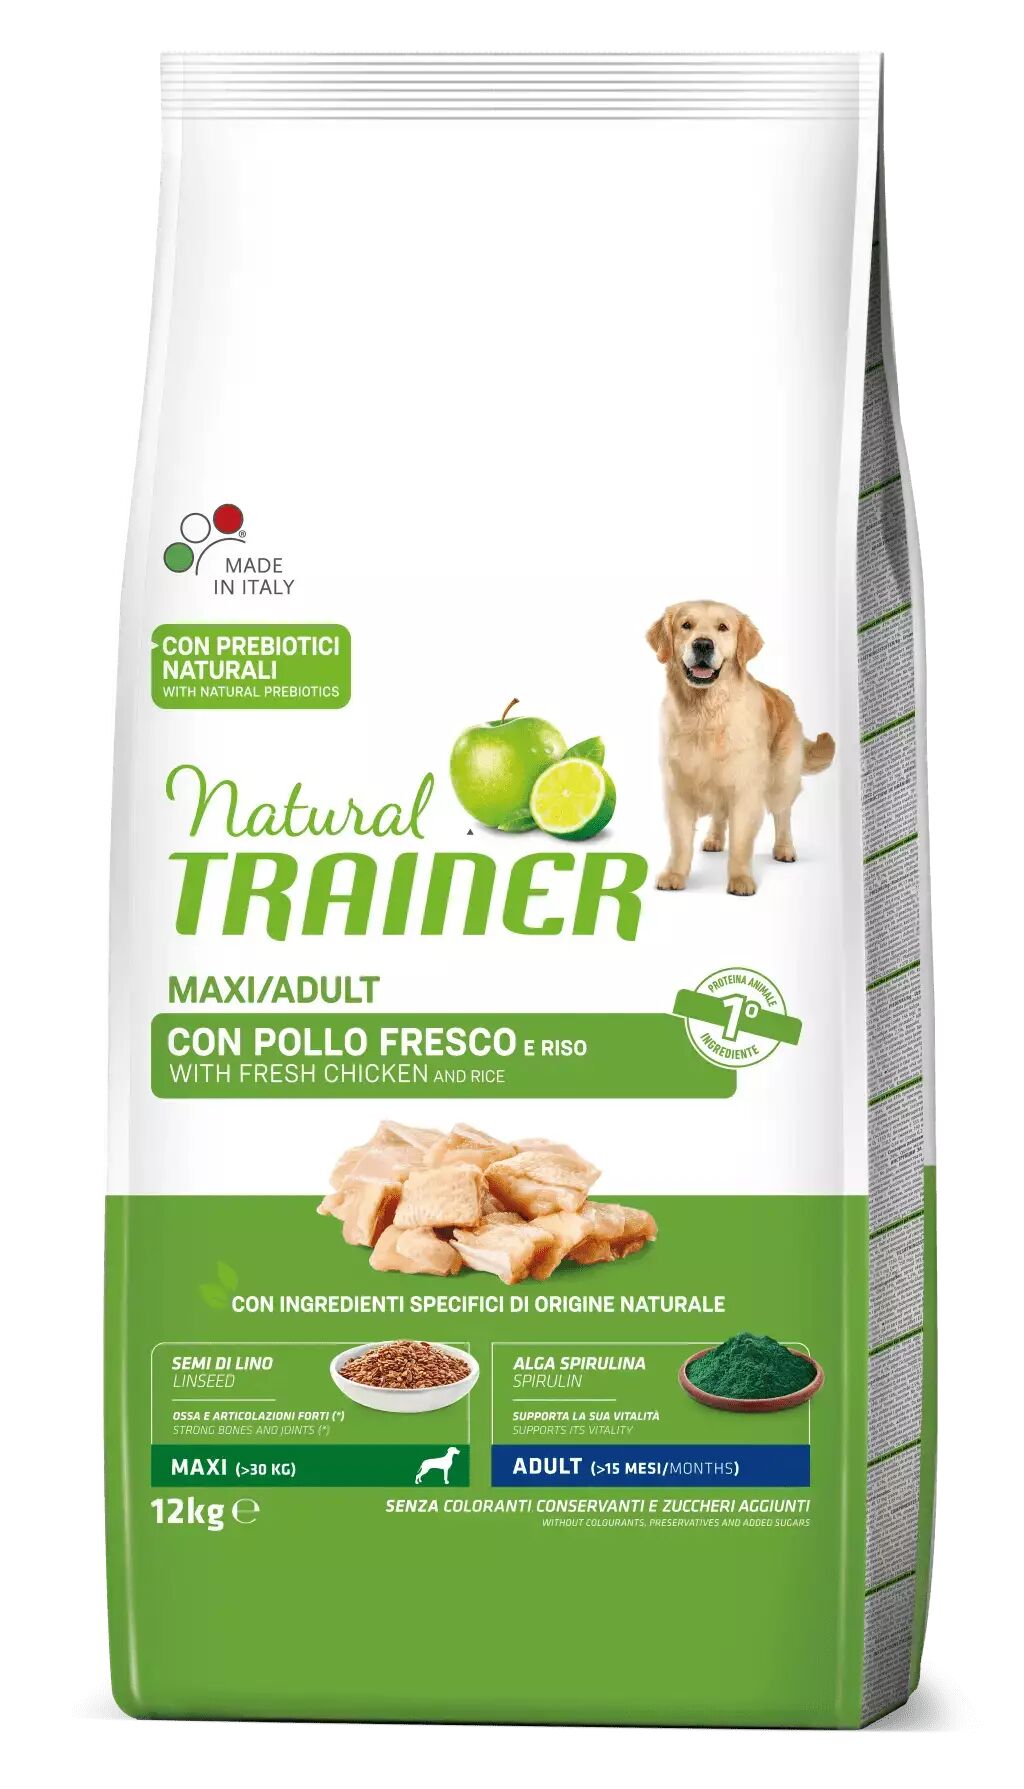 Trainer - Nova Food Natural Trainer cani Maxi Adult Pollo Fresco e Riso 12kg 12.00 kg